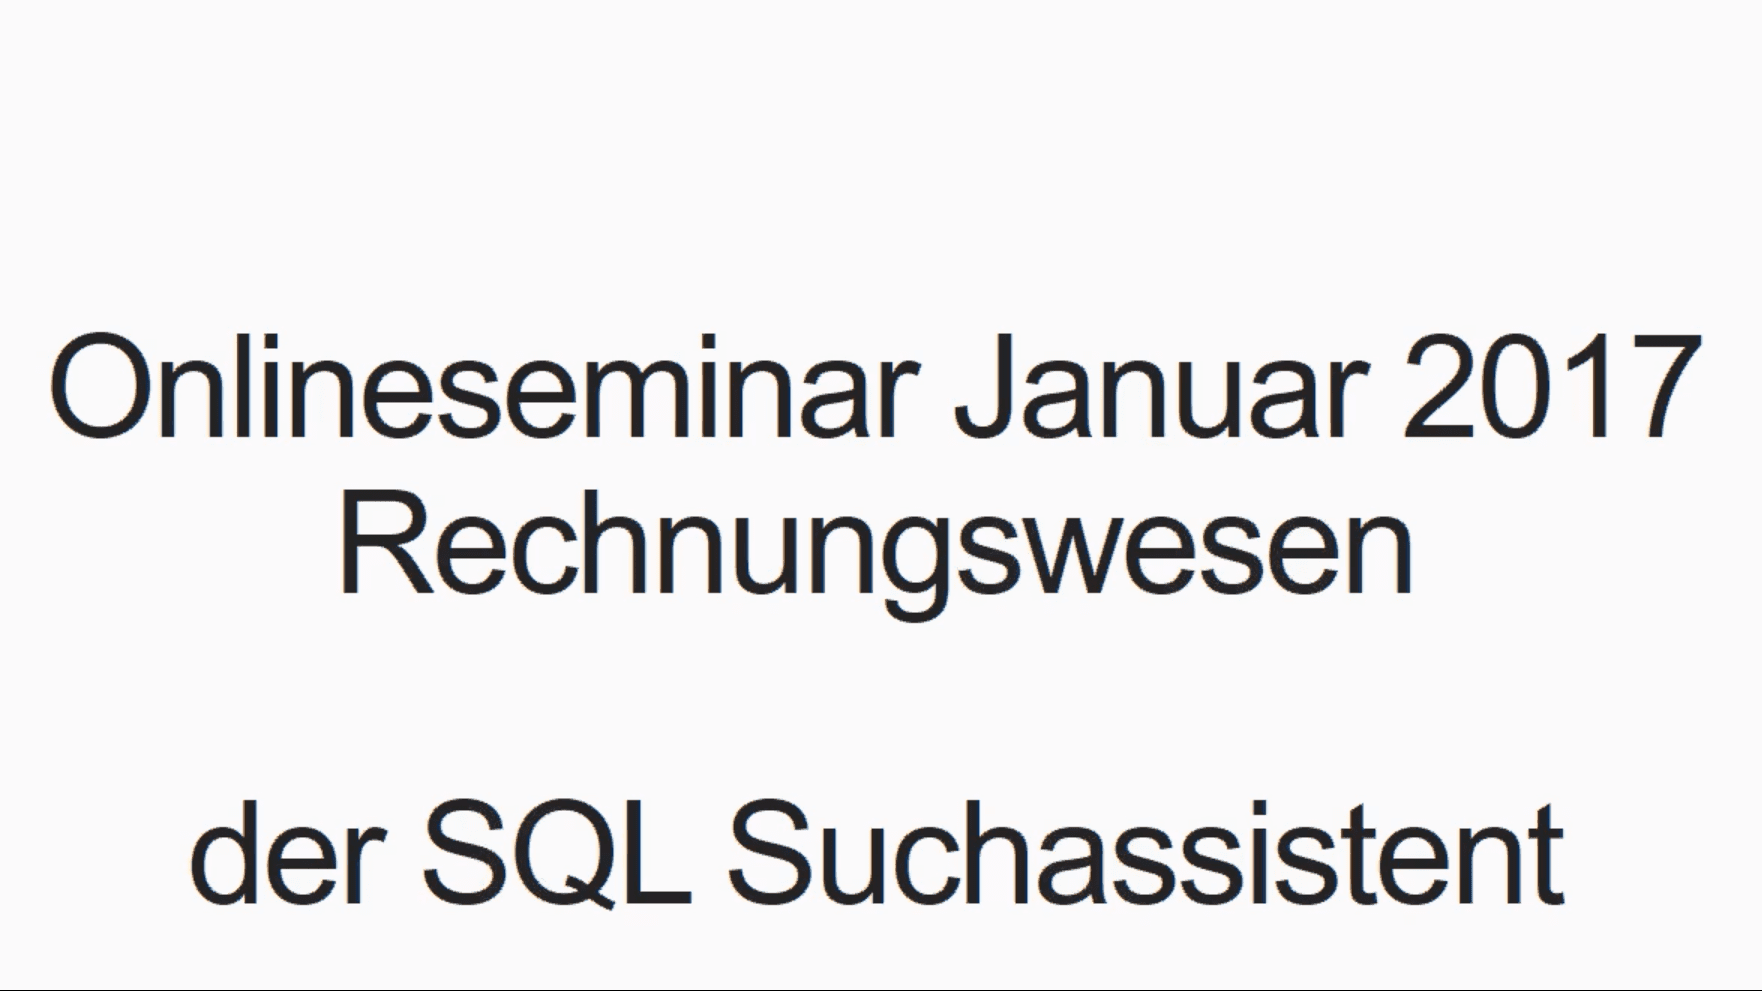 SQL Suchassistent